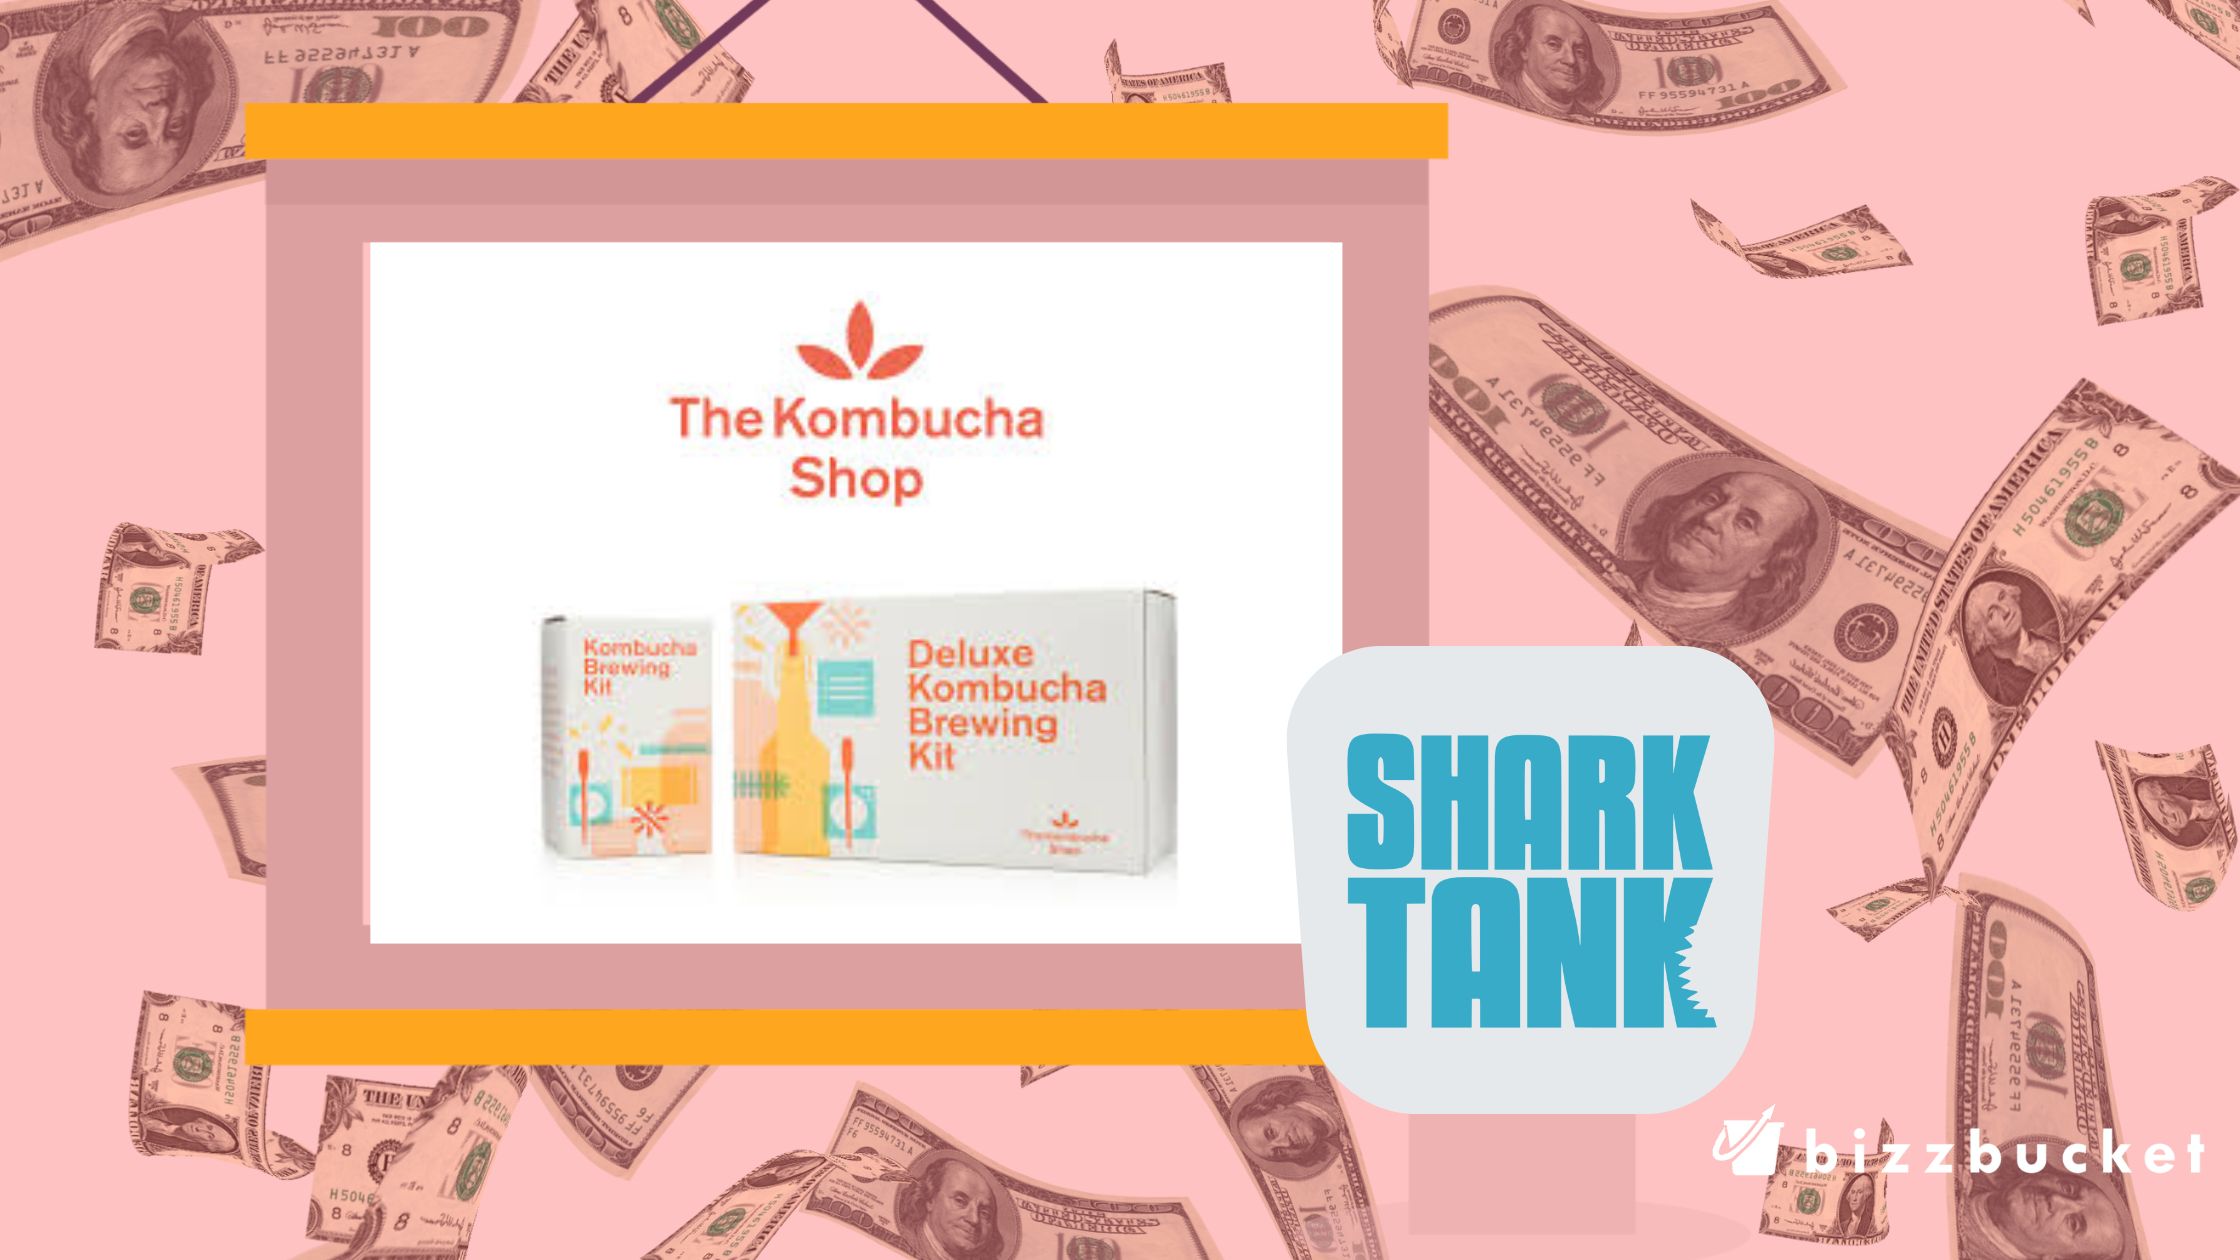 The Kombucha Shop shark tank